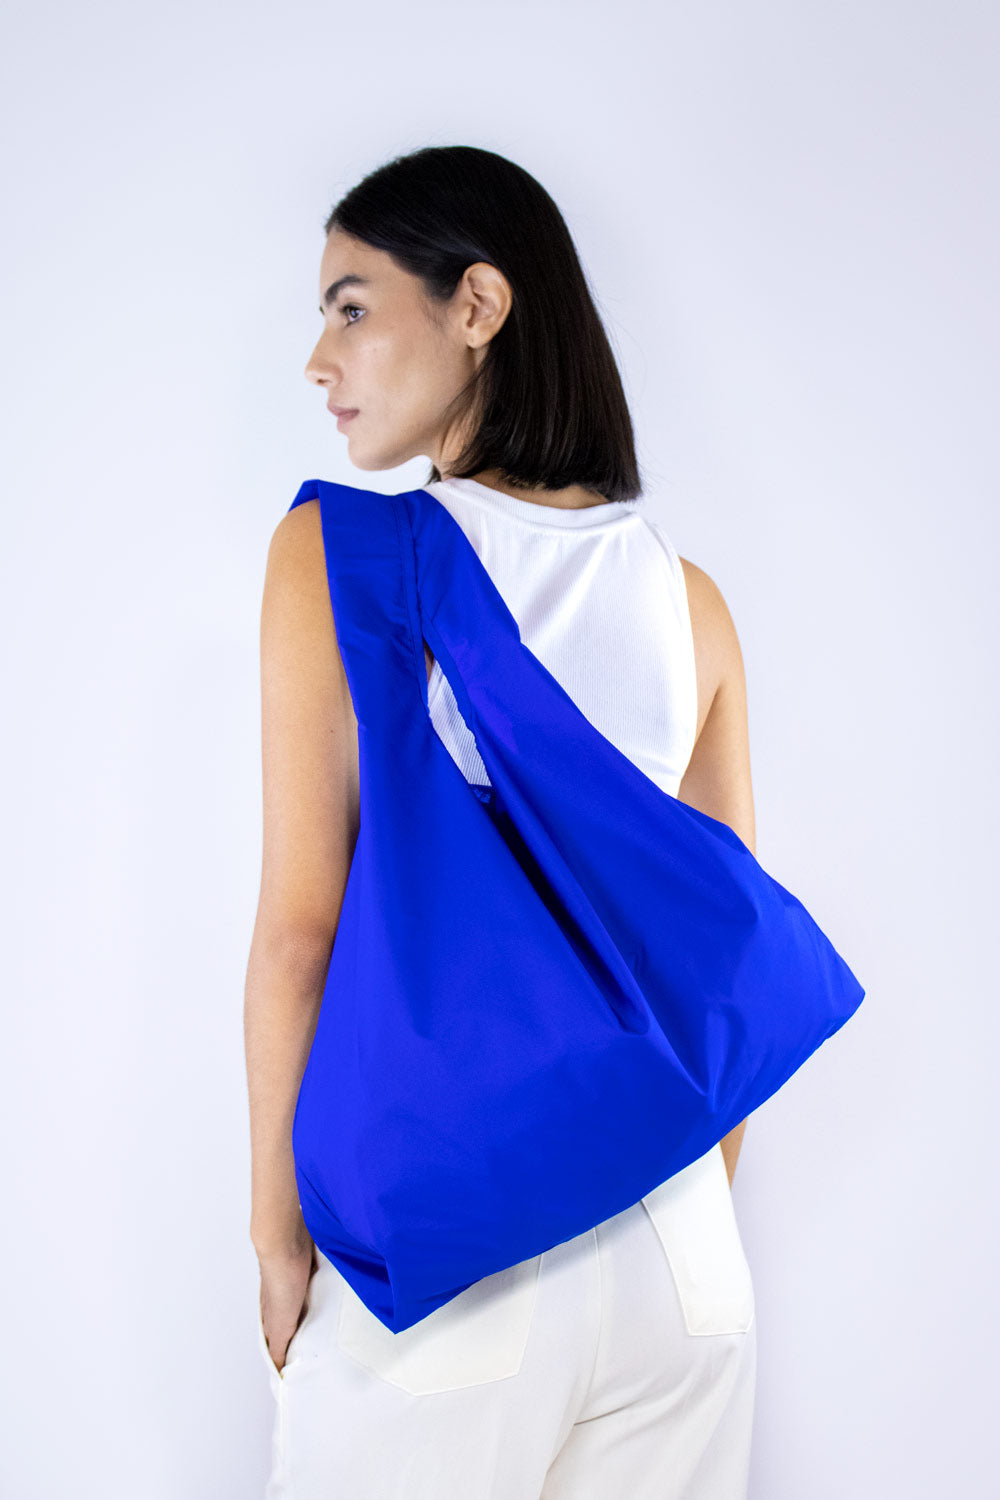 Kind Bag Recycled Plastic Reusable Bag Sapphire Blue Singapore